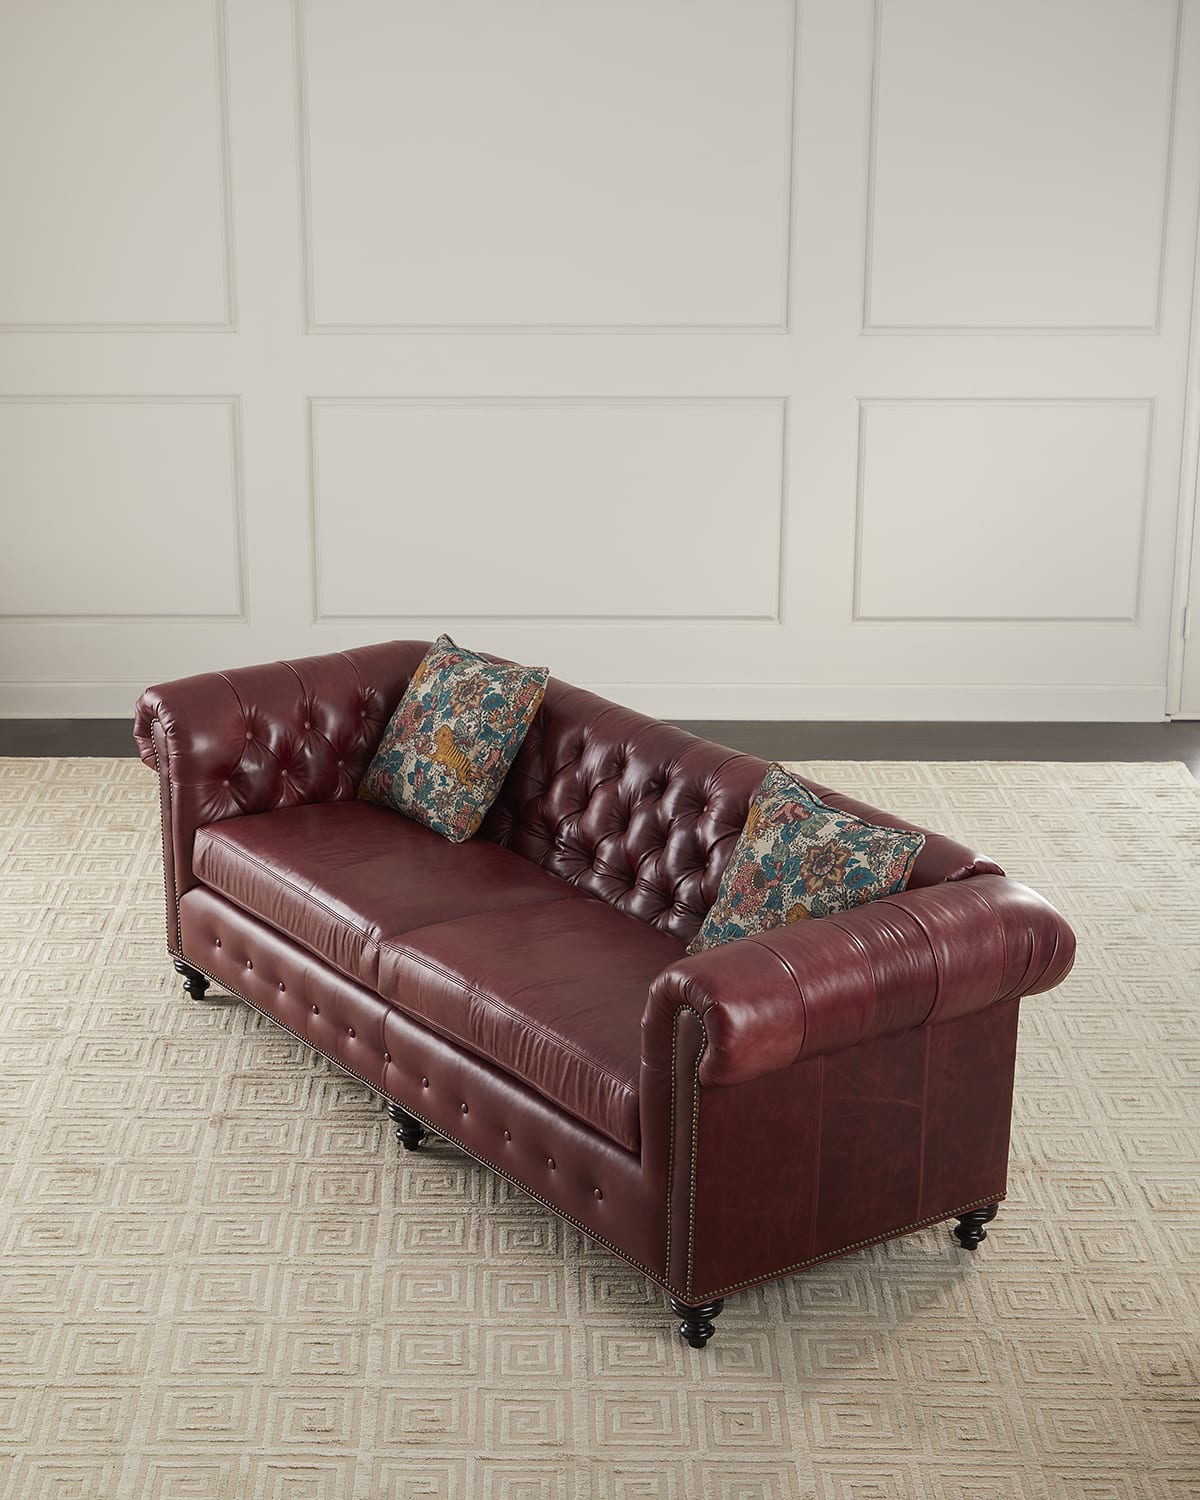 Hooker Furniture Kane Channel Tufted Leather Sofa